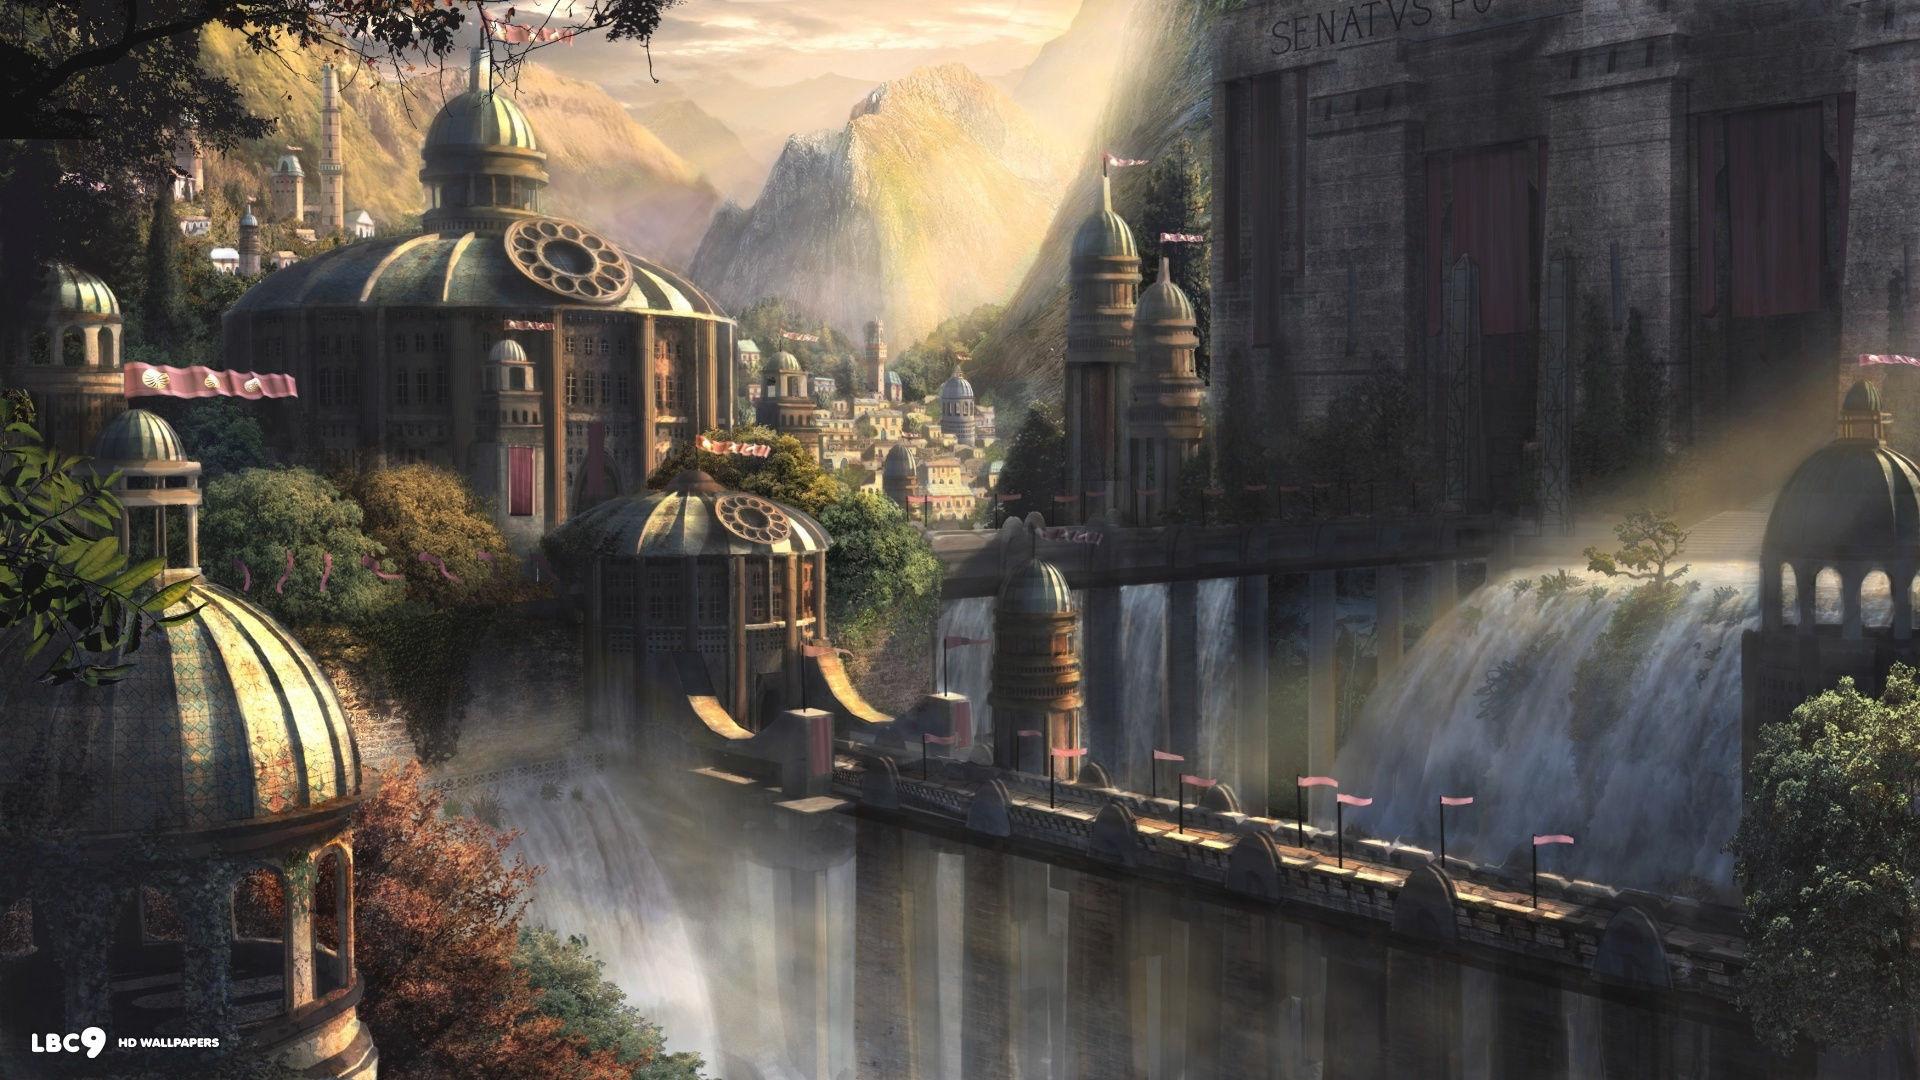 Fantasy Castle Wallpaper HD